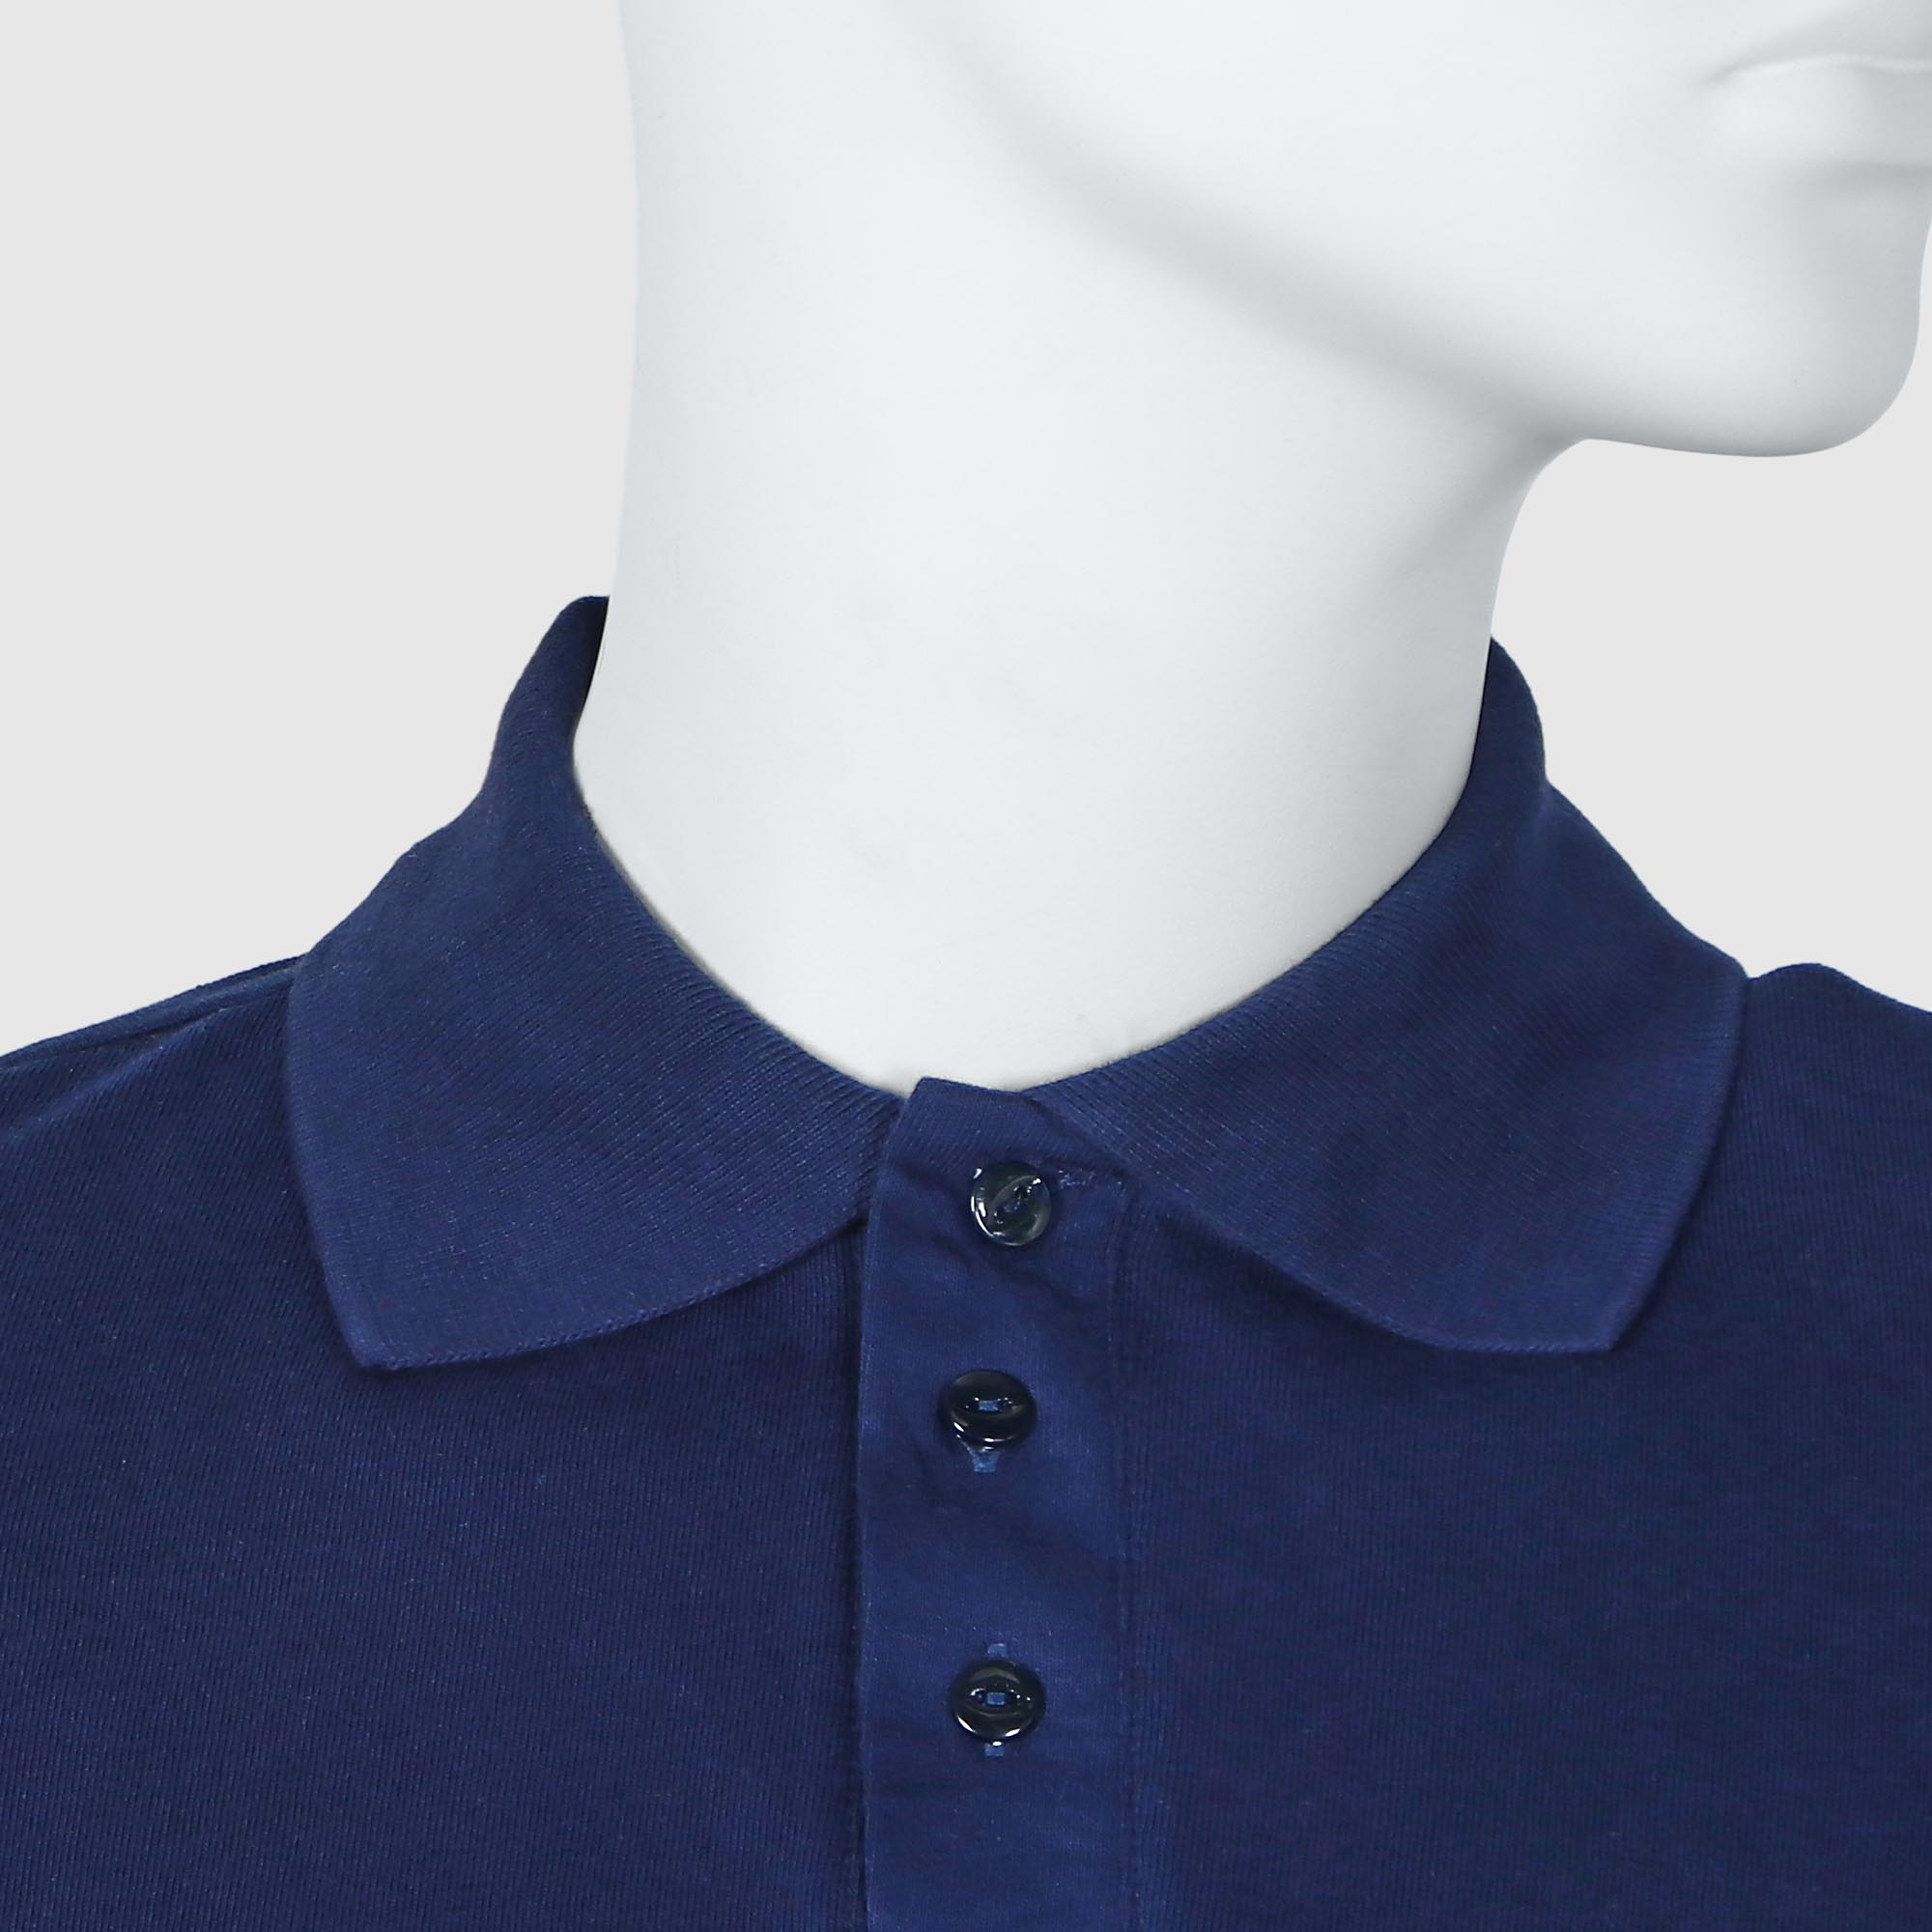 Мужская футболка-поло Diva Teks синяя (DTD-10), цвет синий, размер 52-54 - фото 4